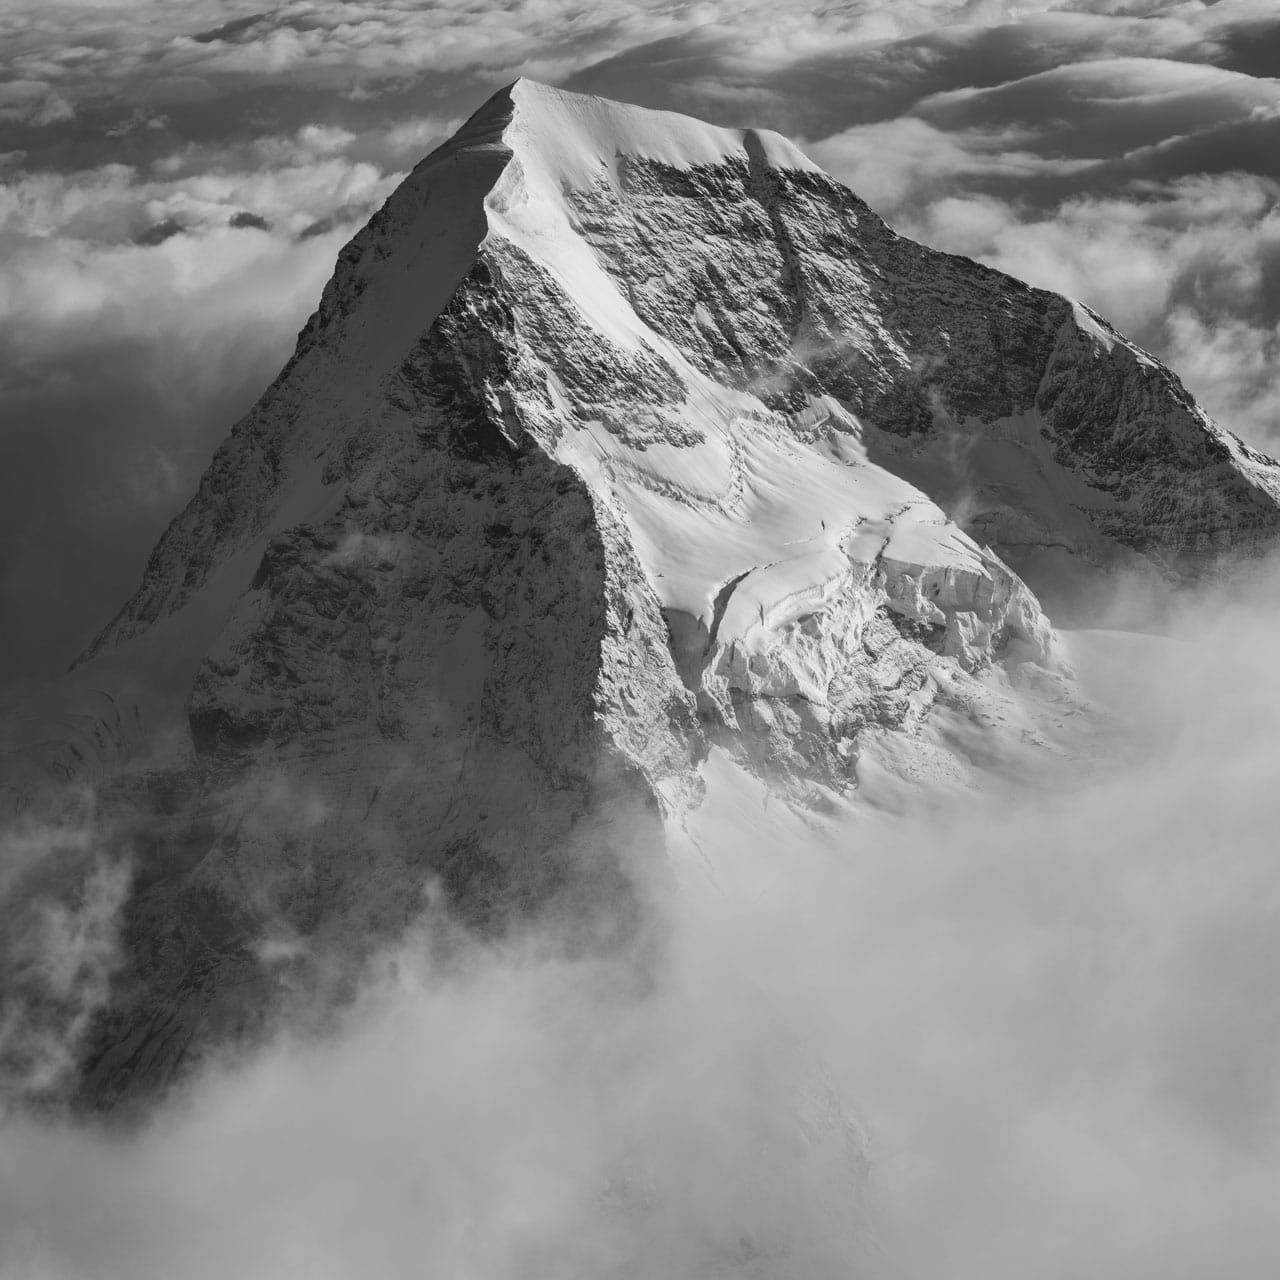 mountain photo - alps photo - mountain picture - mountain art photo - Massif des bernese alps switzerland